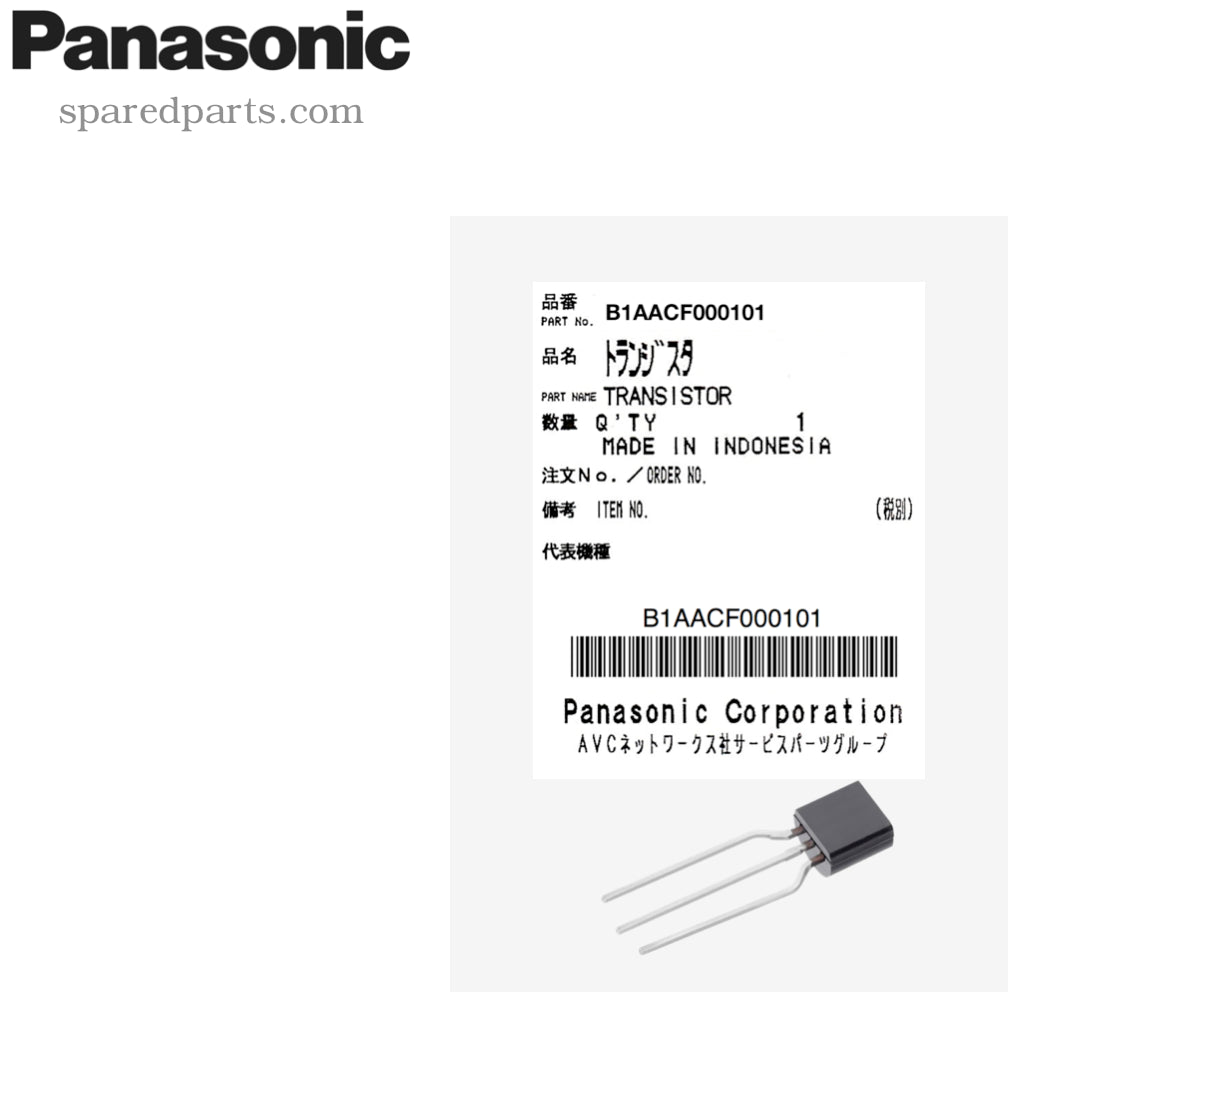 Technics FG Amp Transistor B1AACF000101